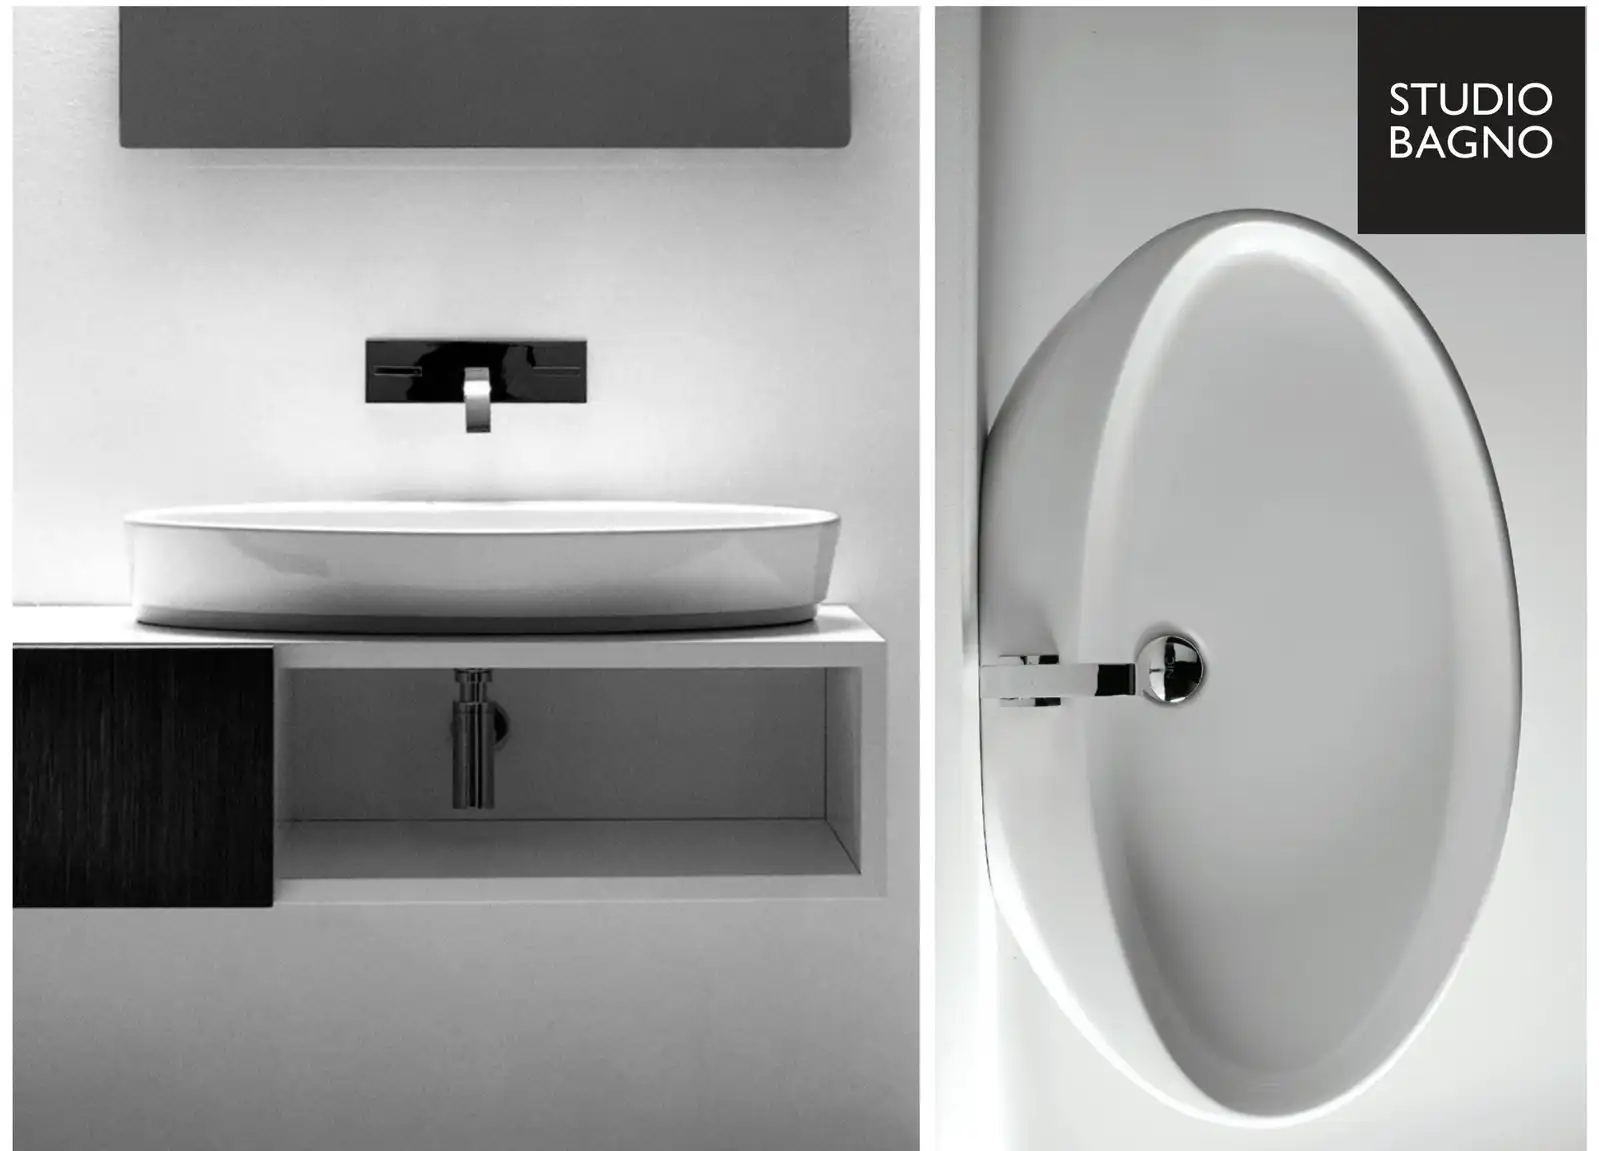 NIC Design Slim Bathroom/Home Ceramic Countertop Mount Basin White 70cm SL70